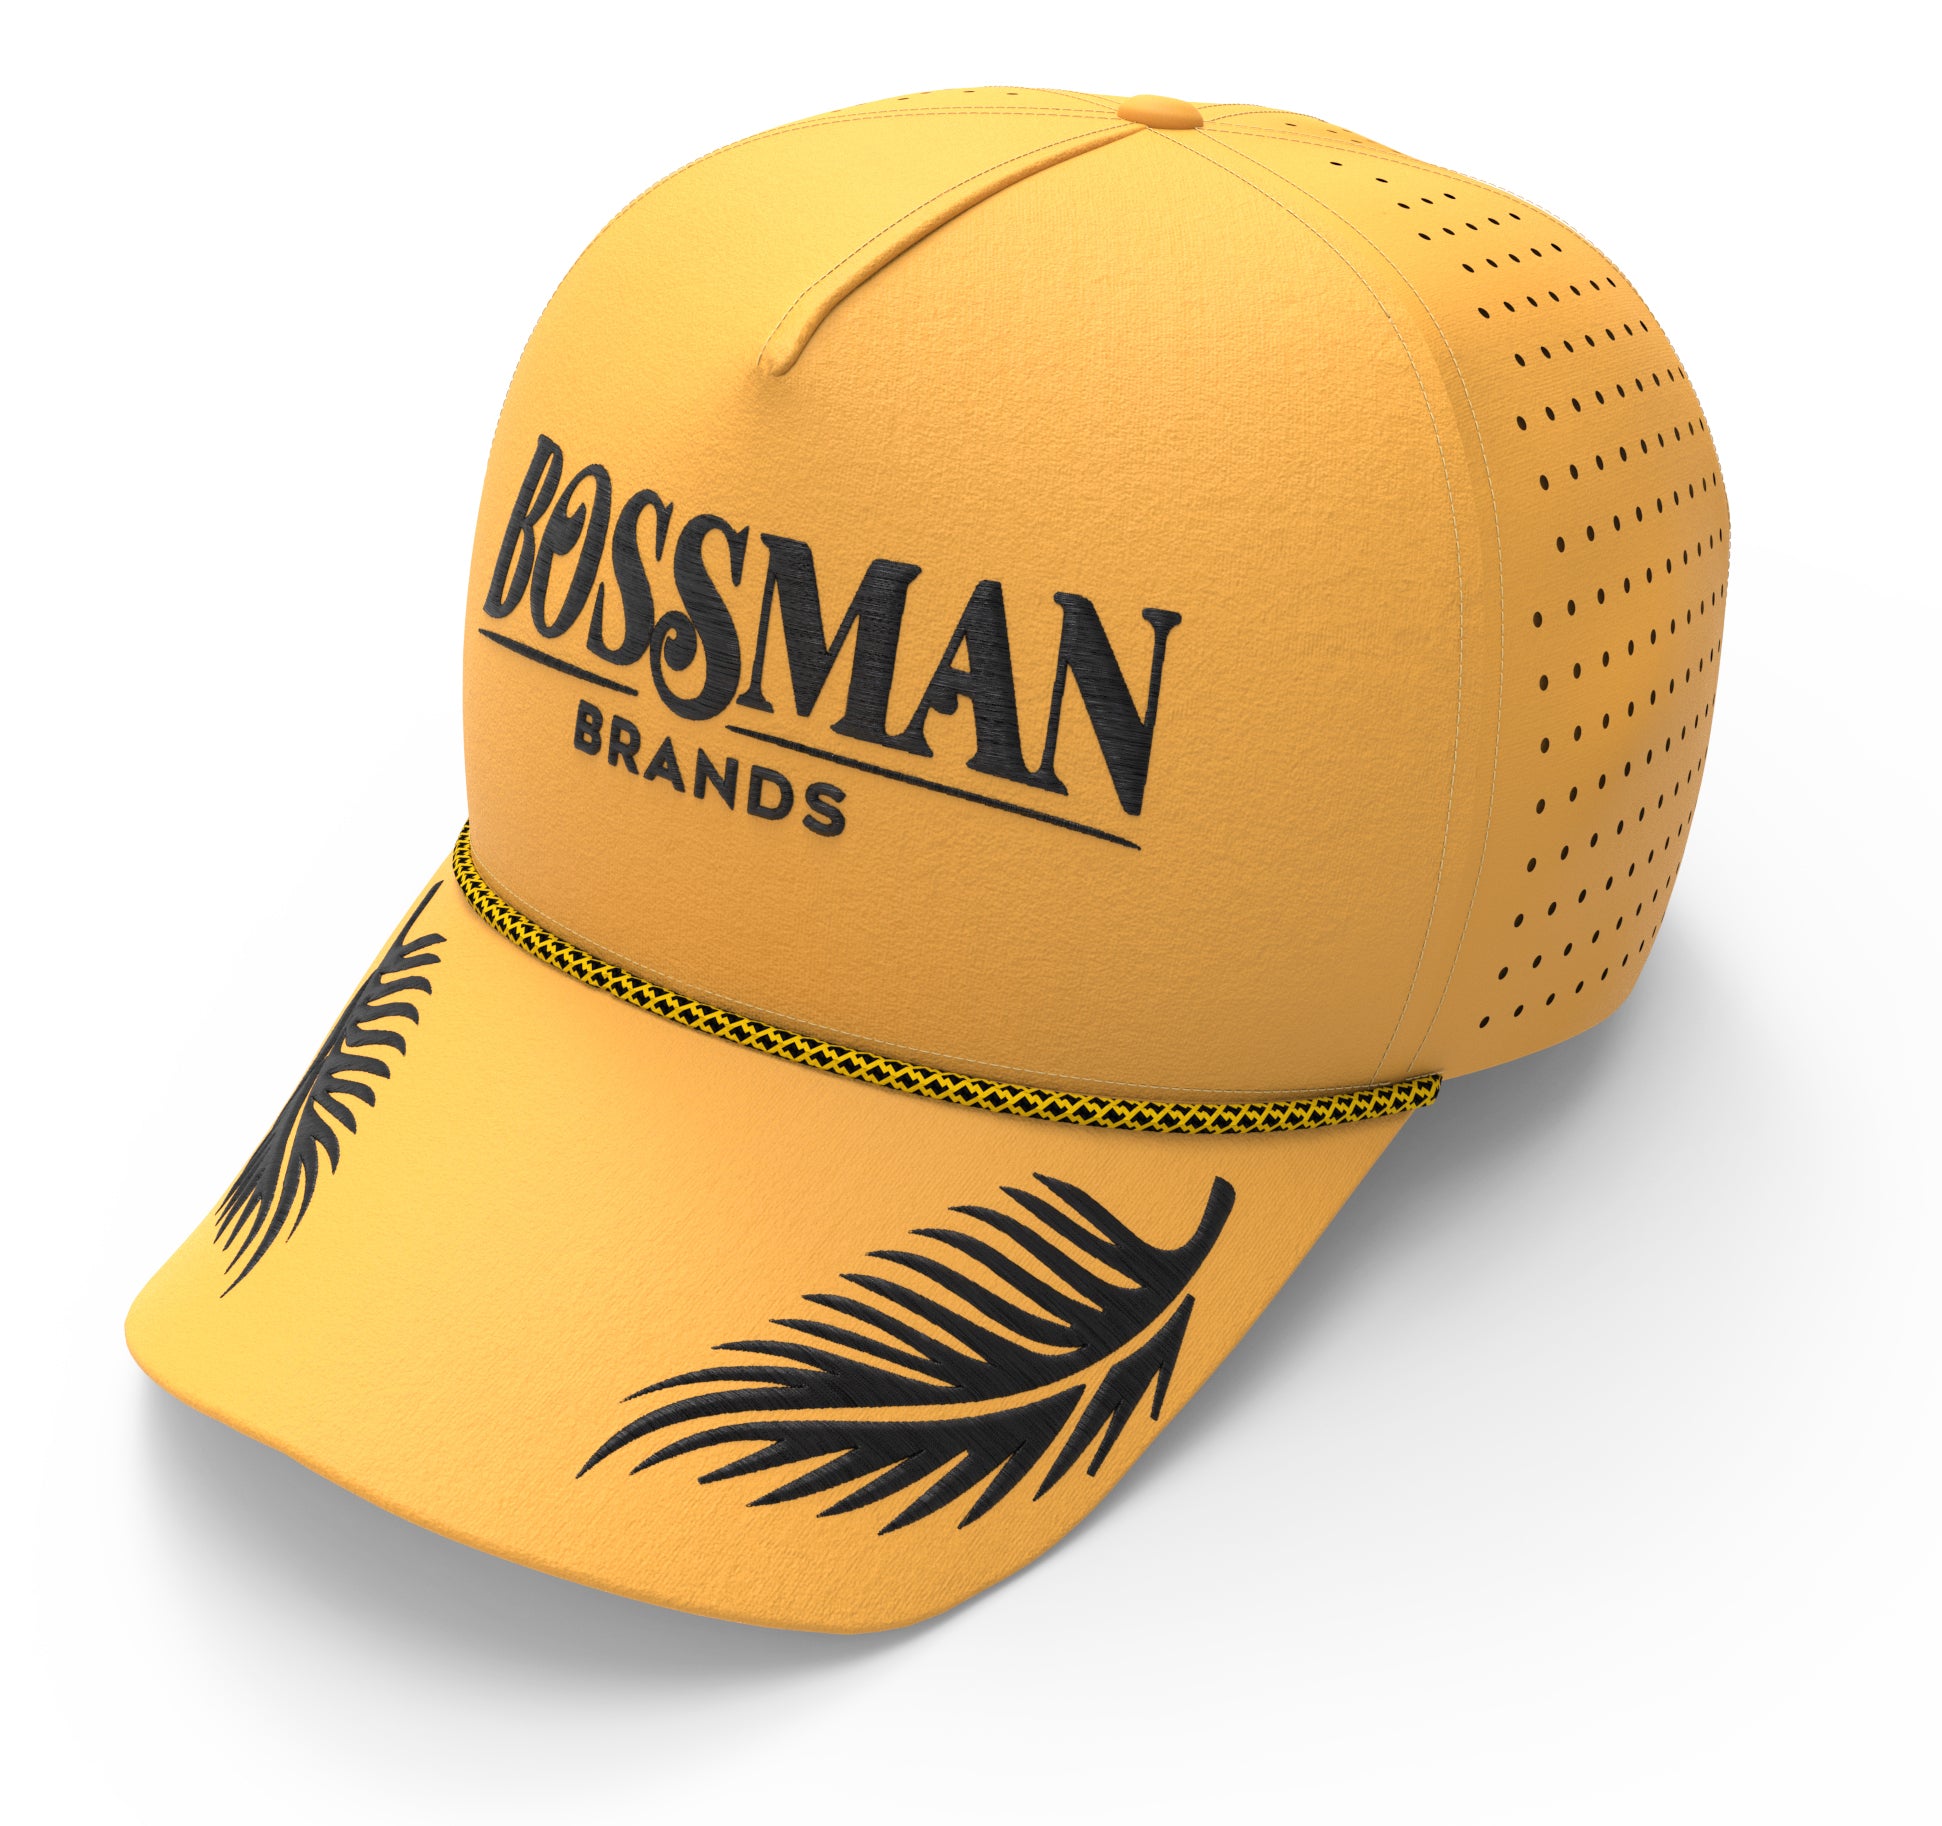 Bossman Water Resistant Trucker Style Golf Hat